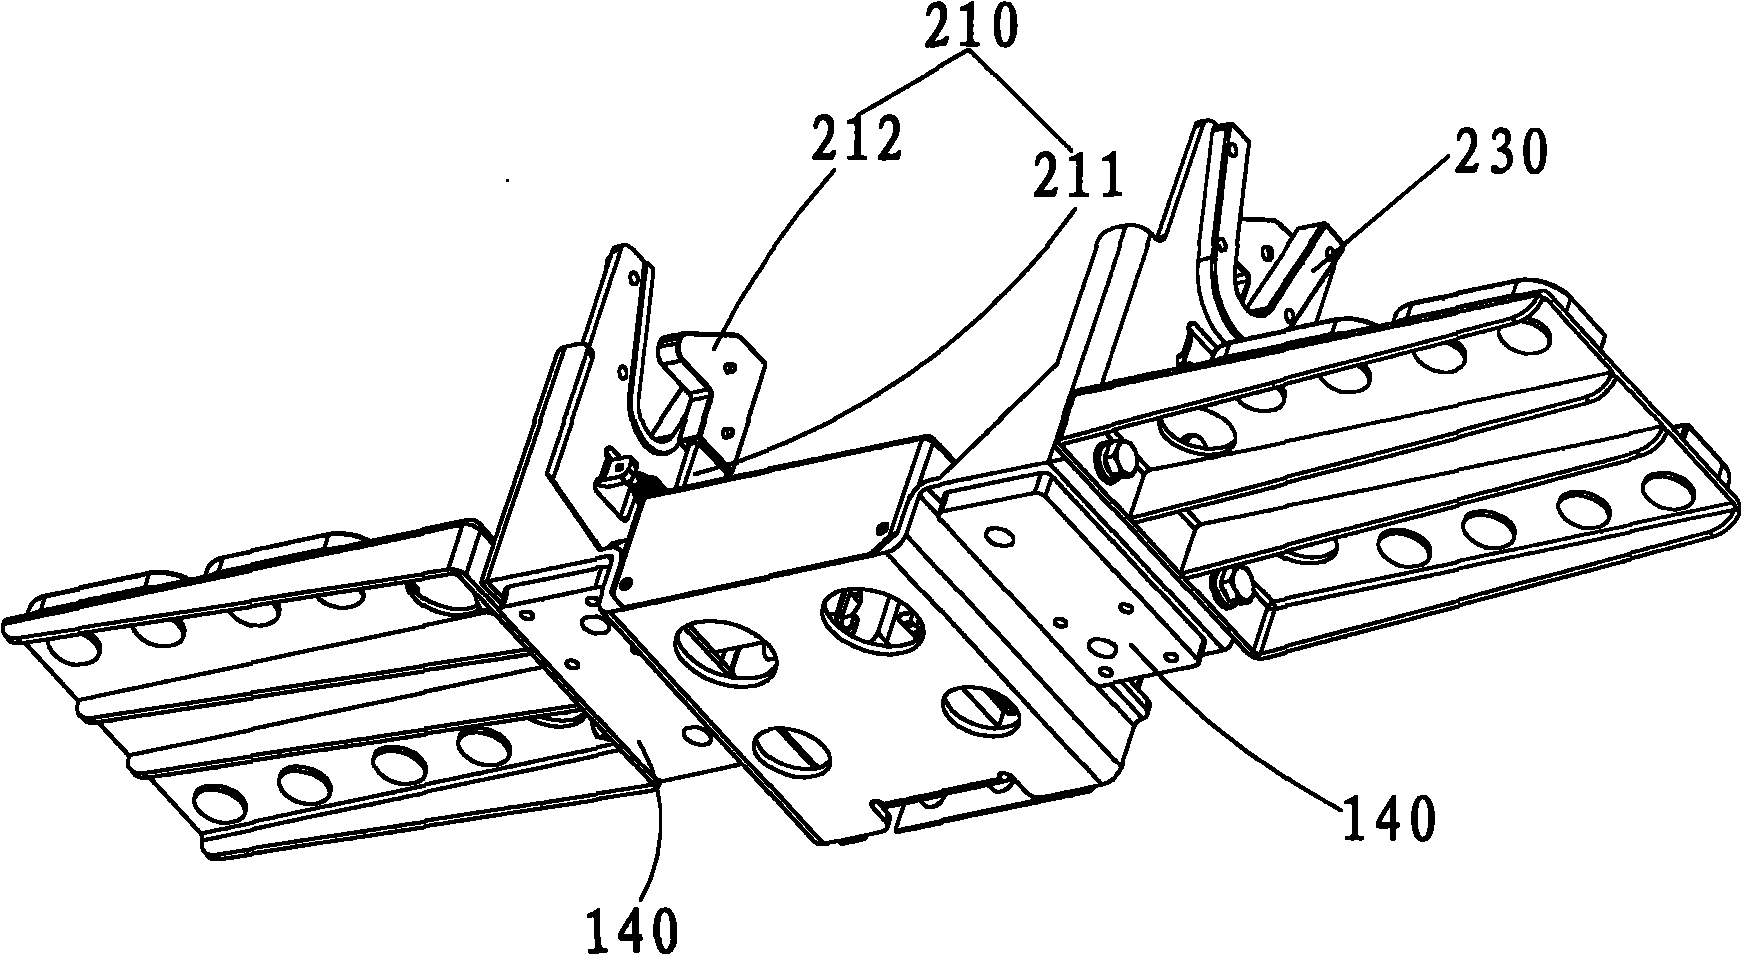 Vibration-proof locking structure